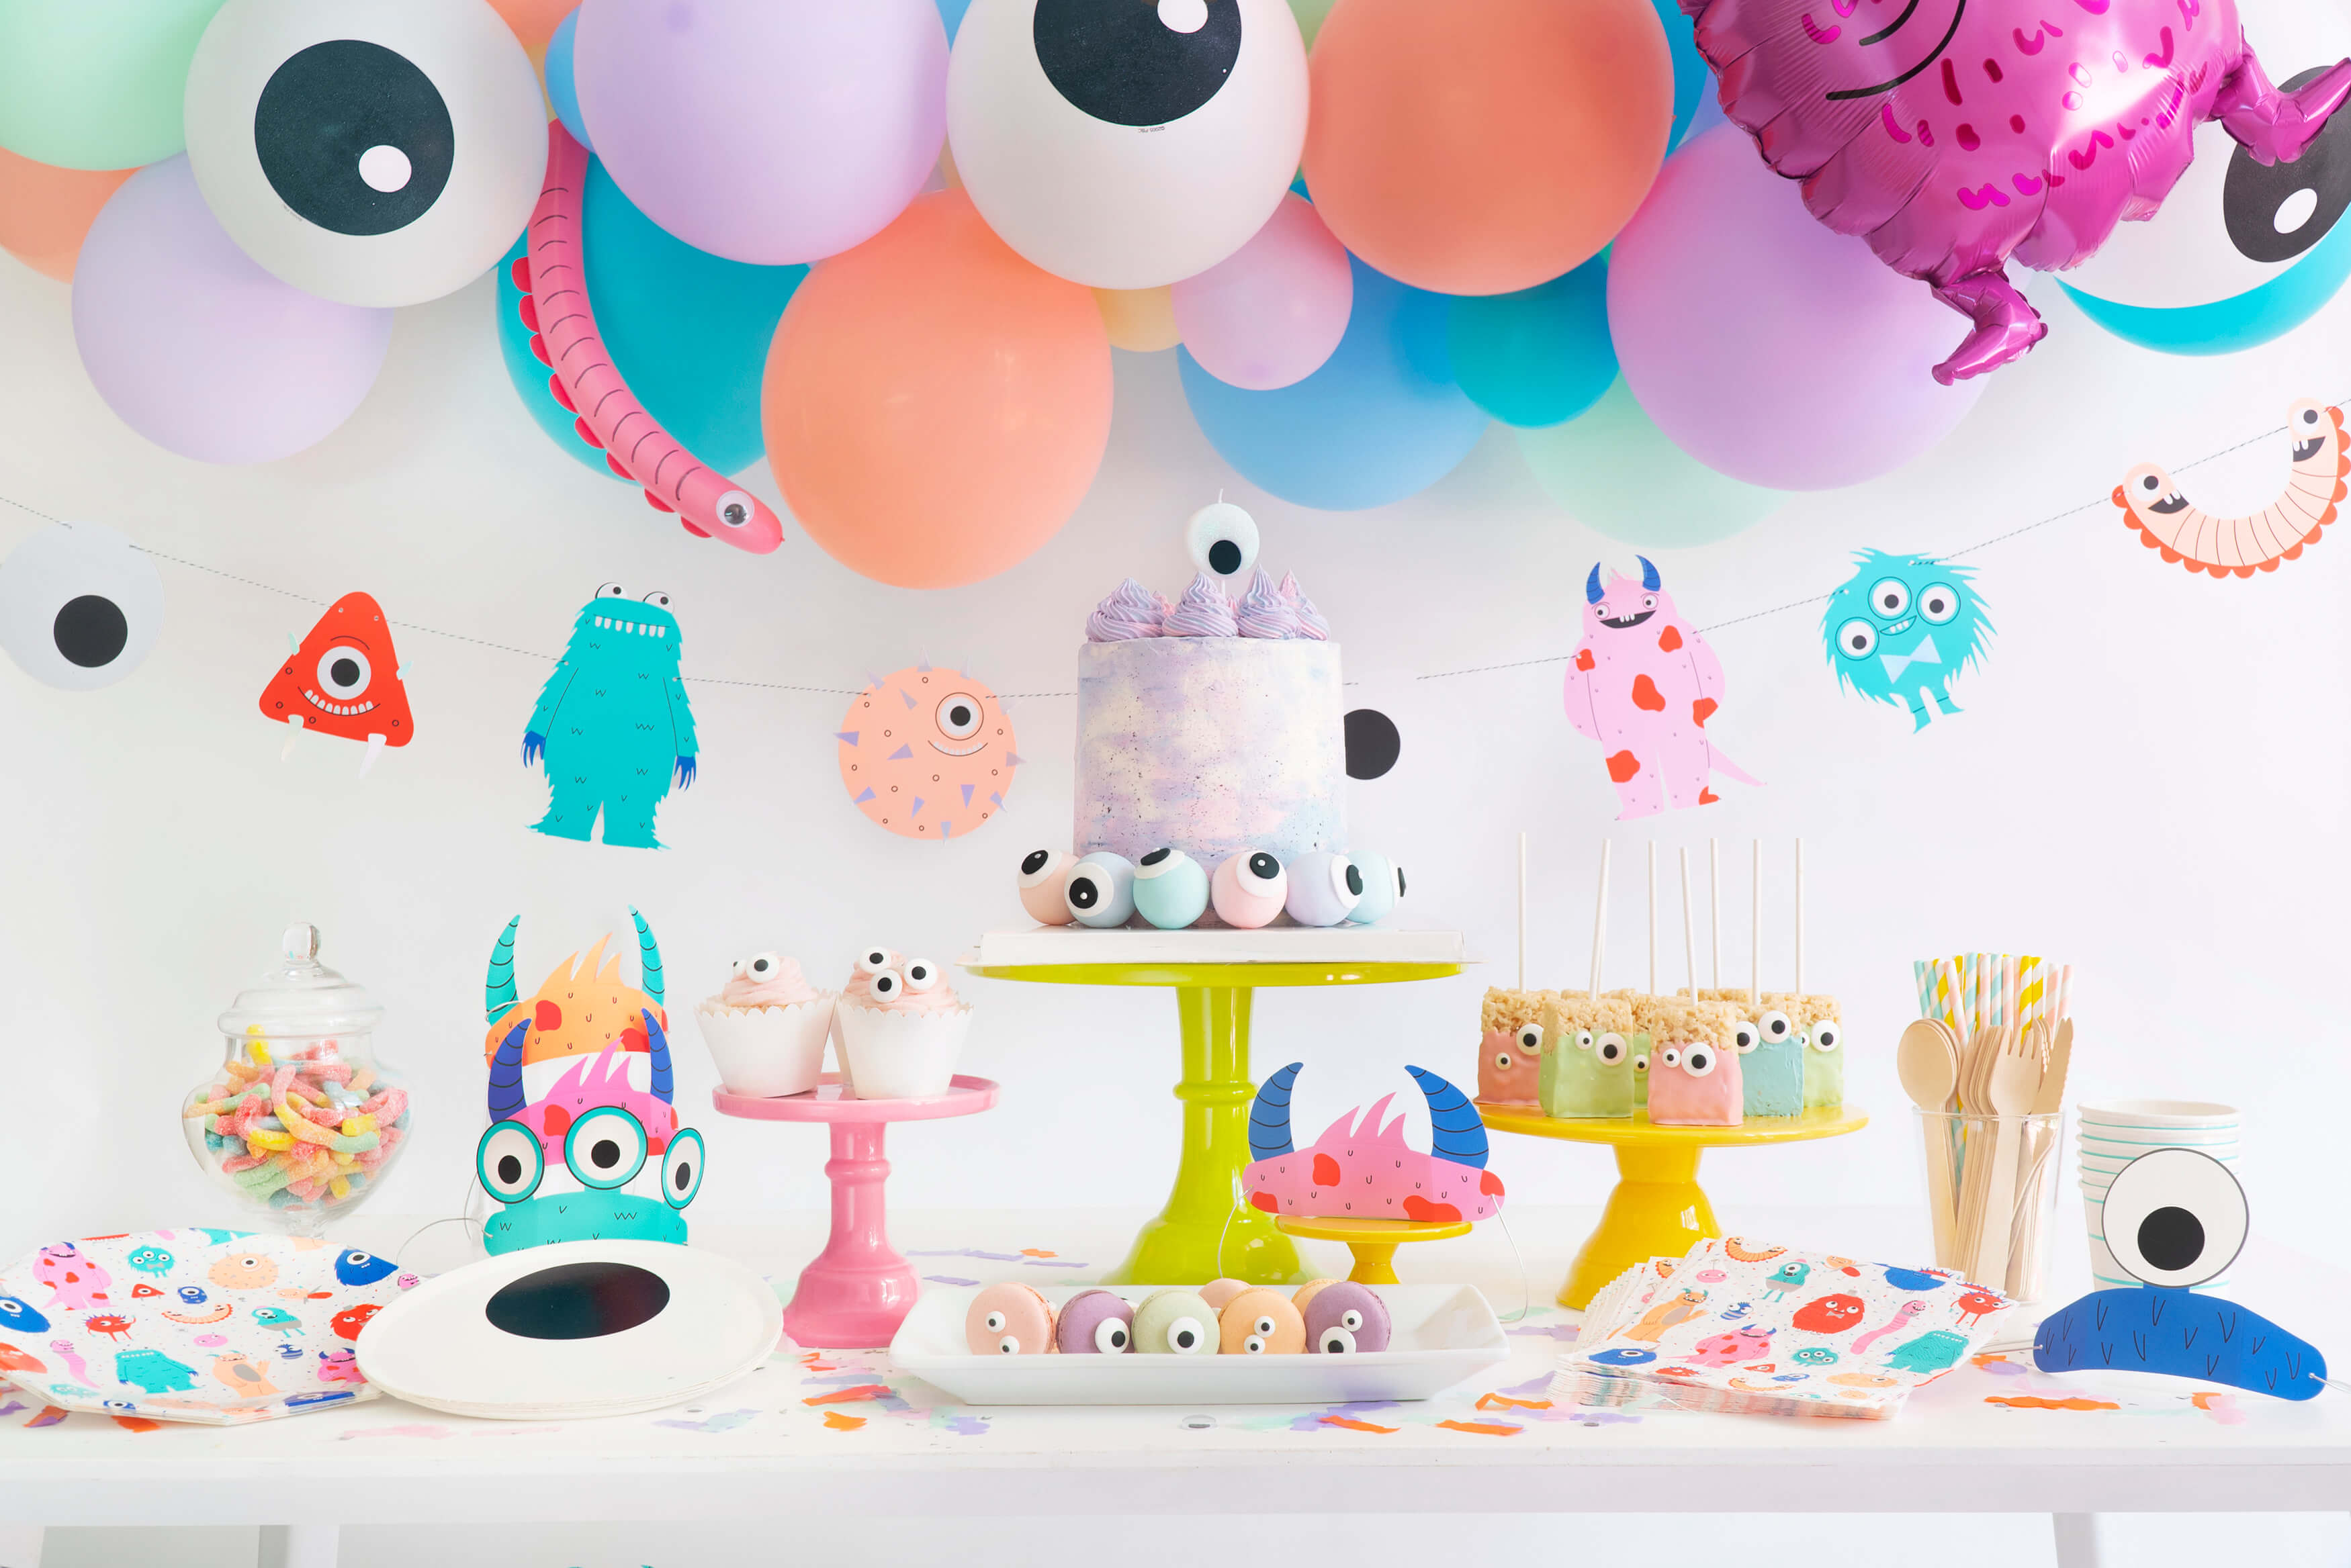 Monster truck illustration  birthday party theme for kids